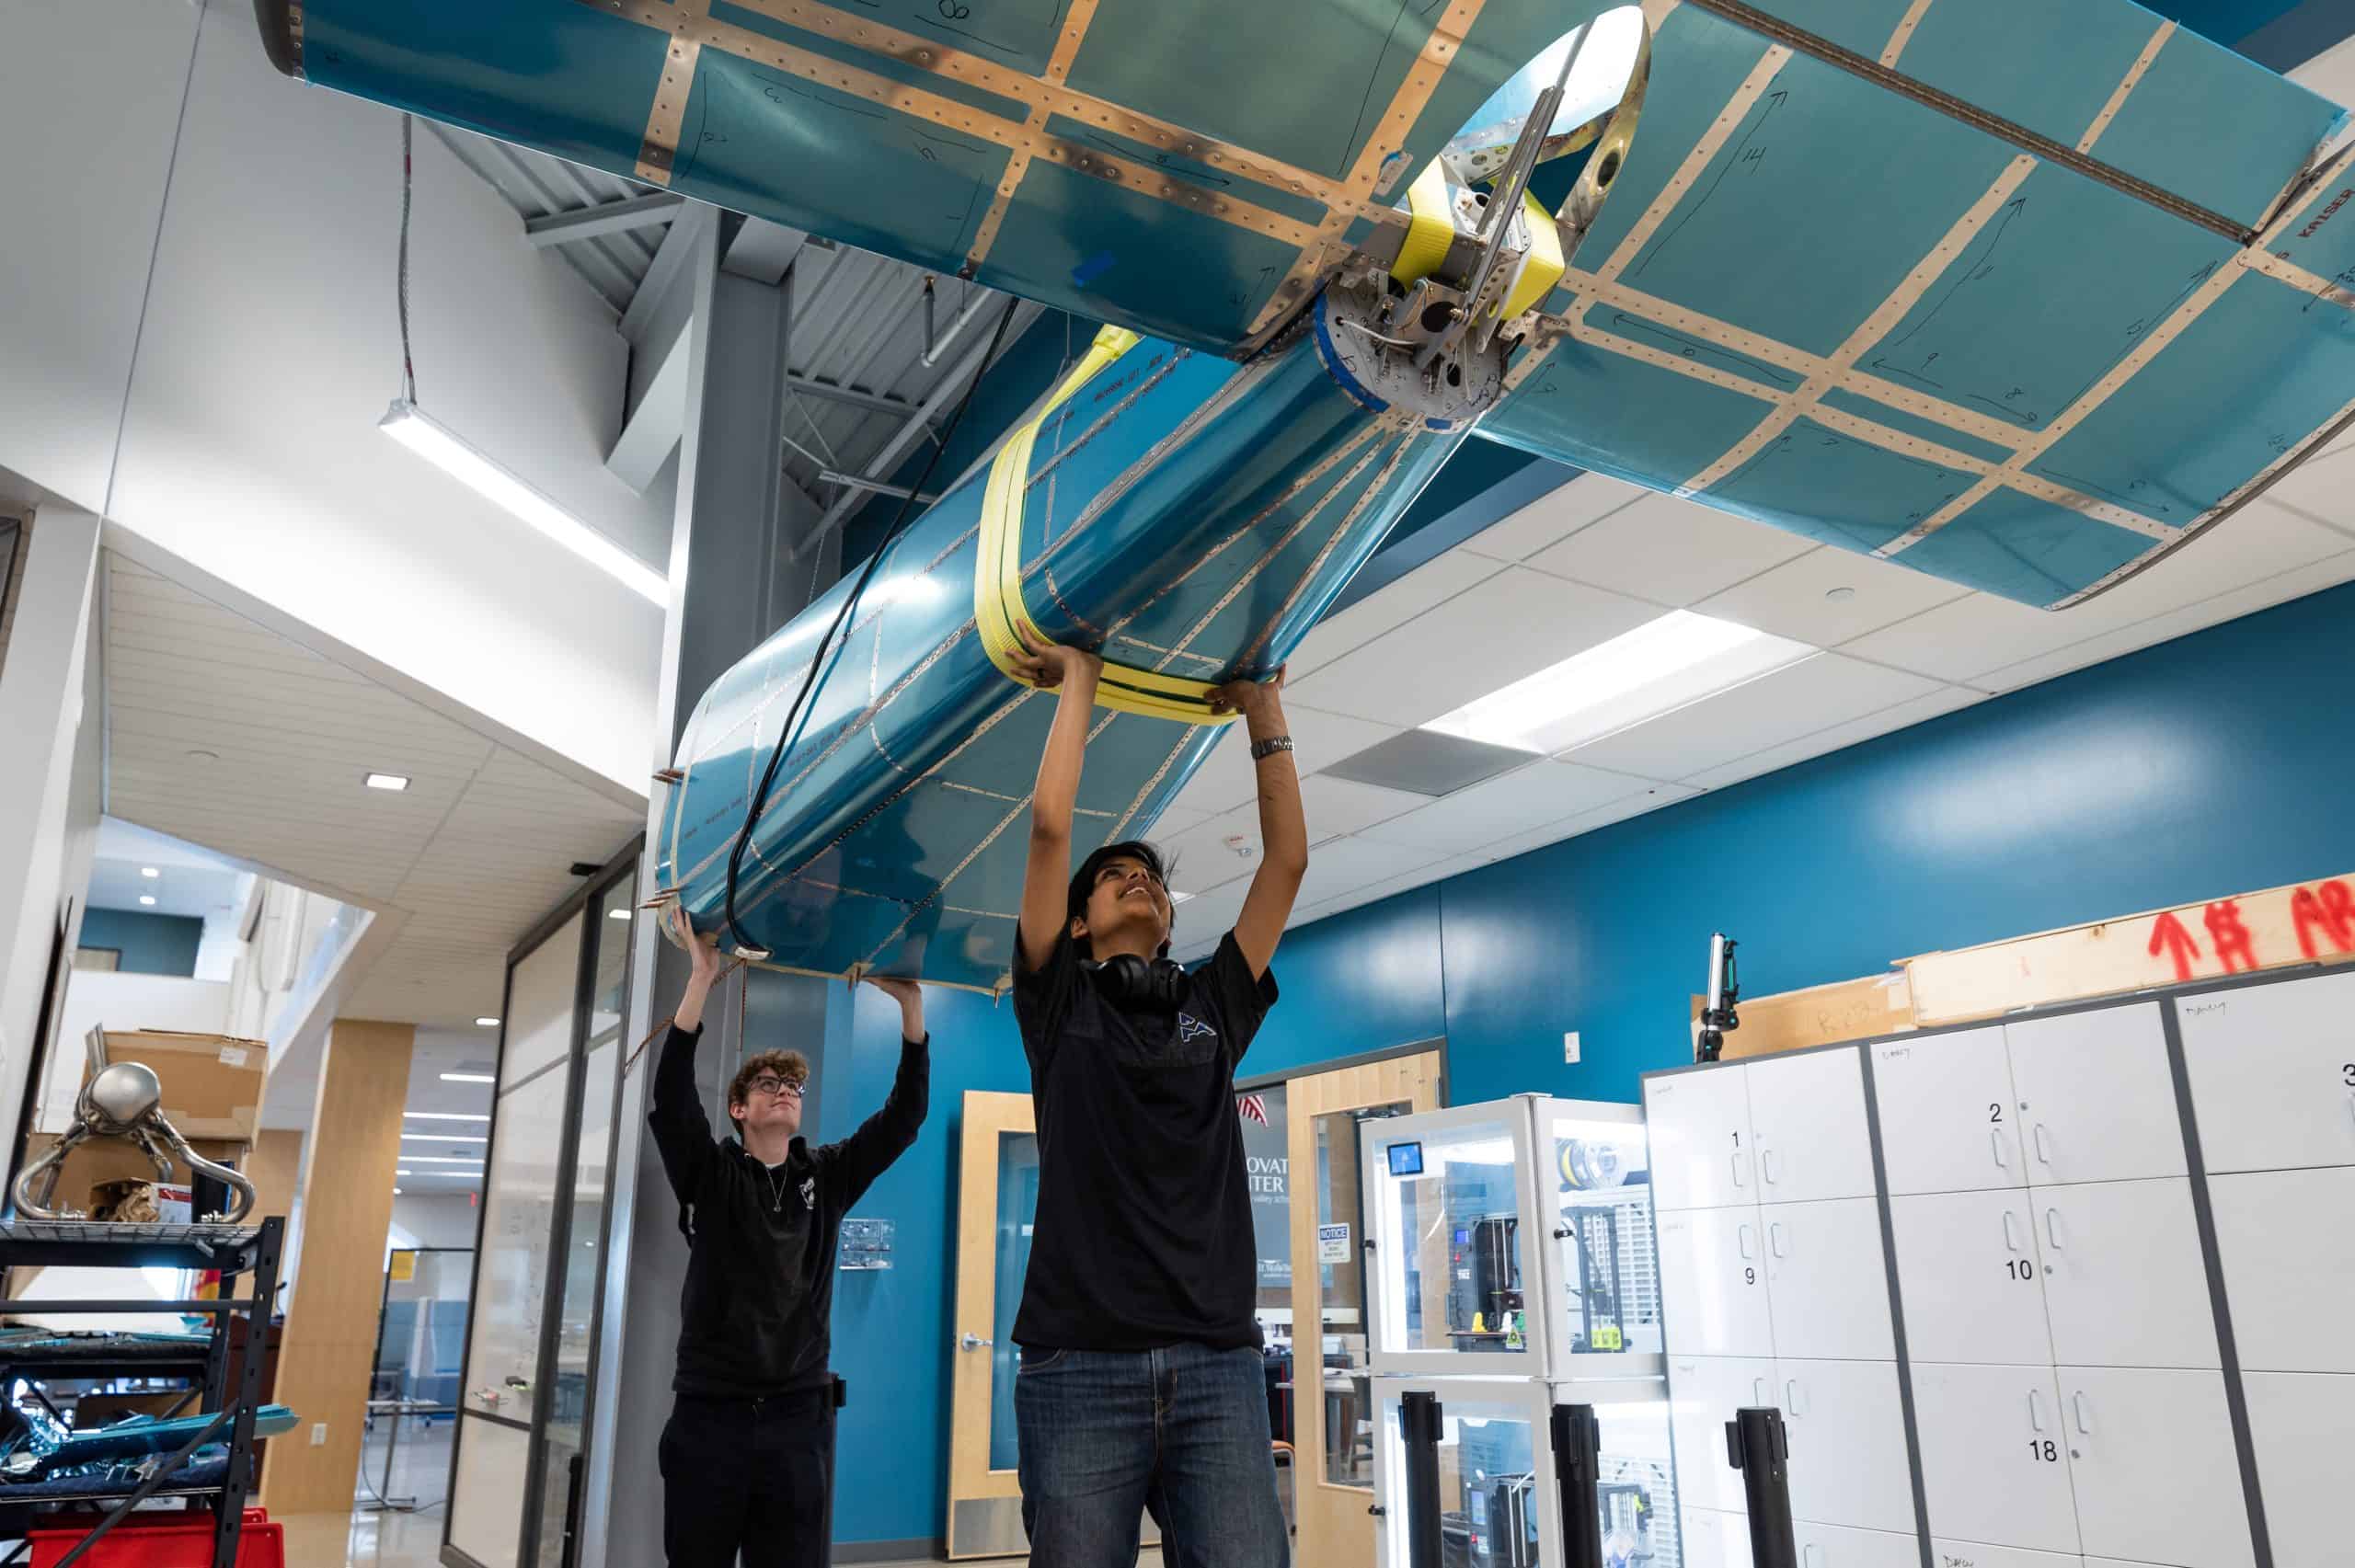 Innovation Center’s Aeronautics Program Receives Grant to Implement LiDAR Technology